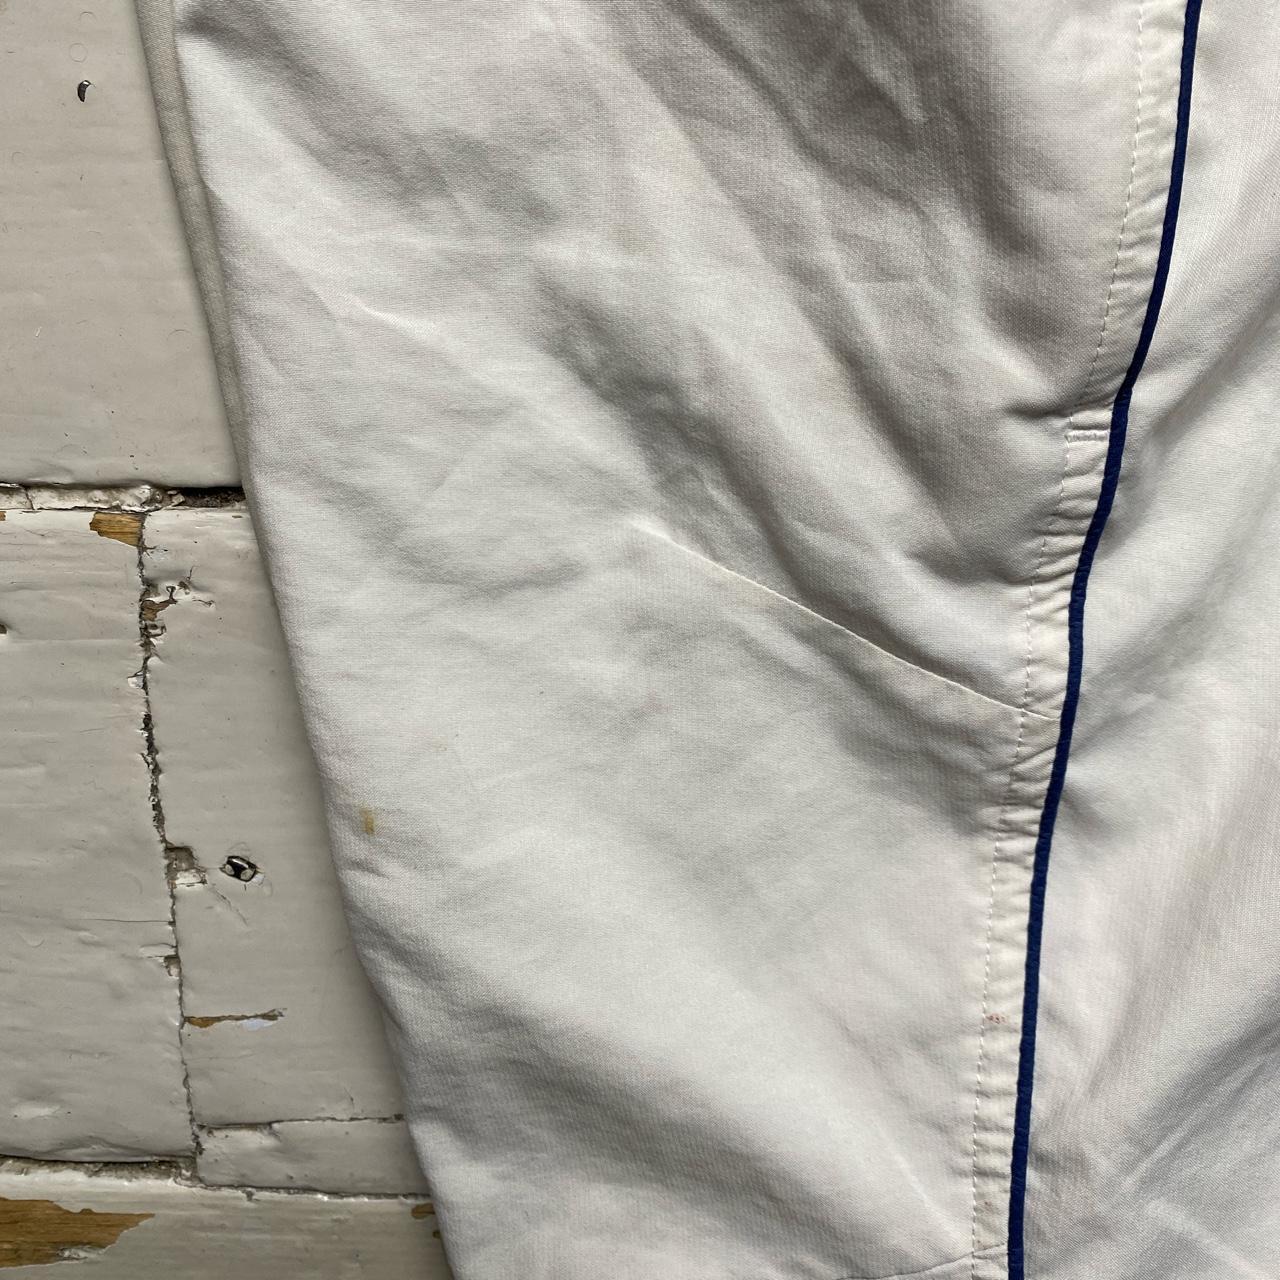 Nike Vintage Swoosh White/Cream Shell Track Pant Shorts